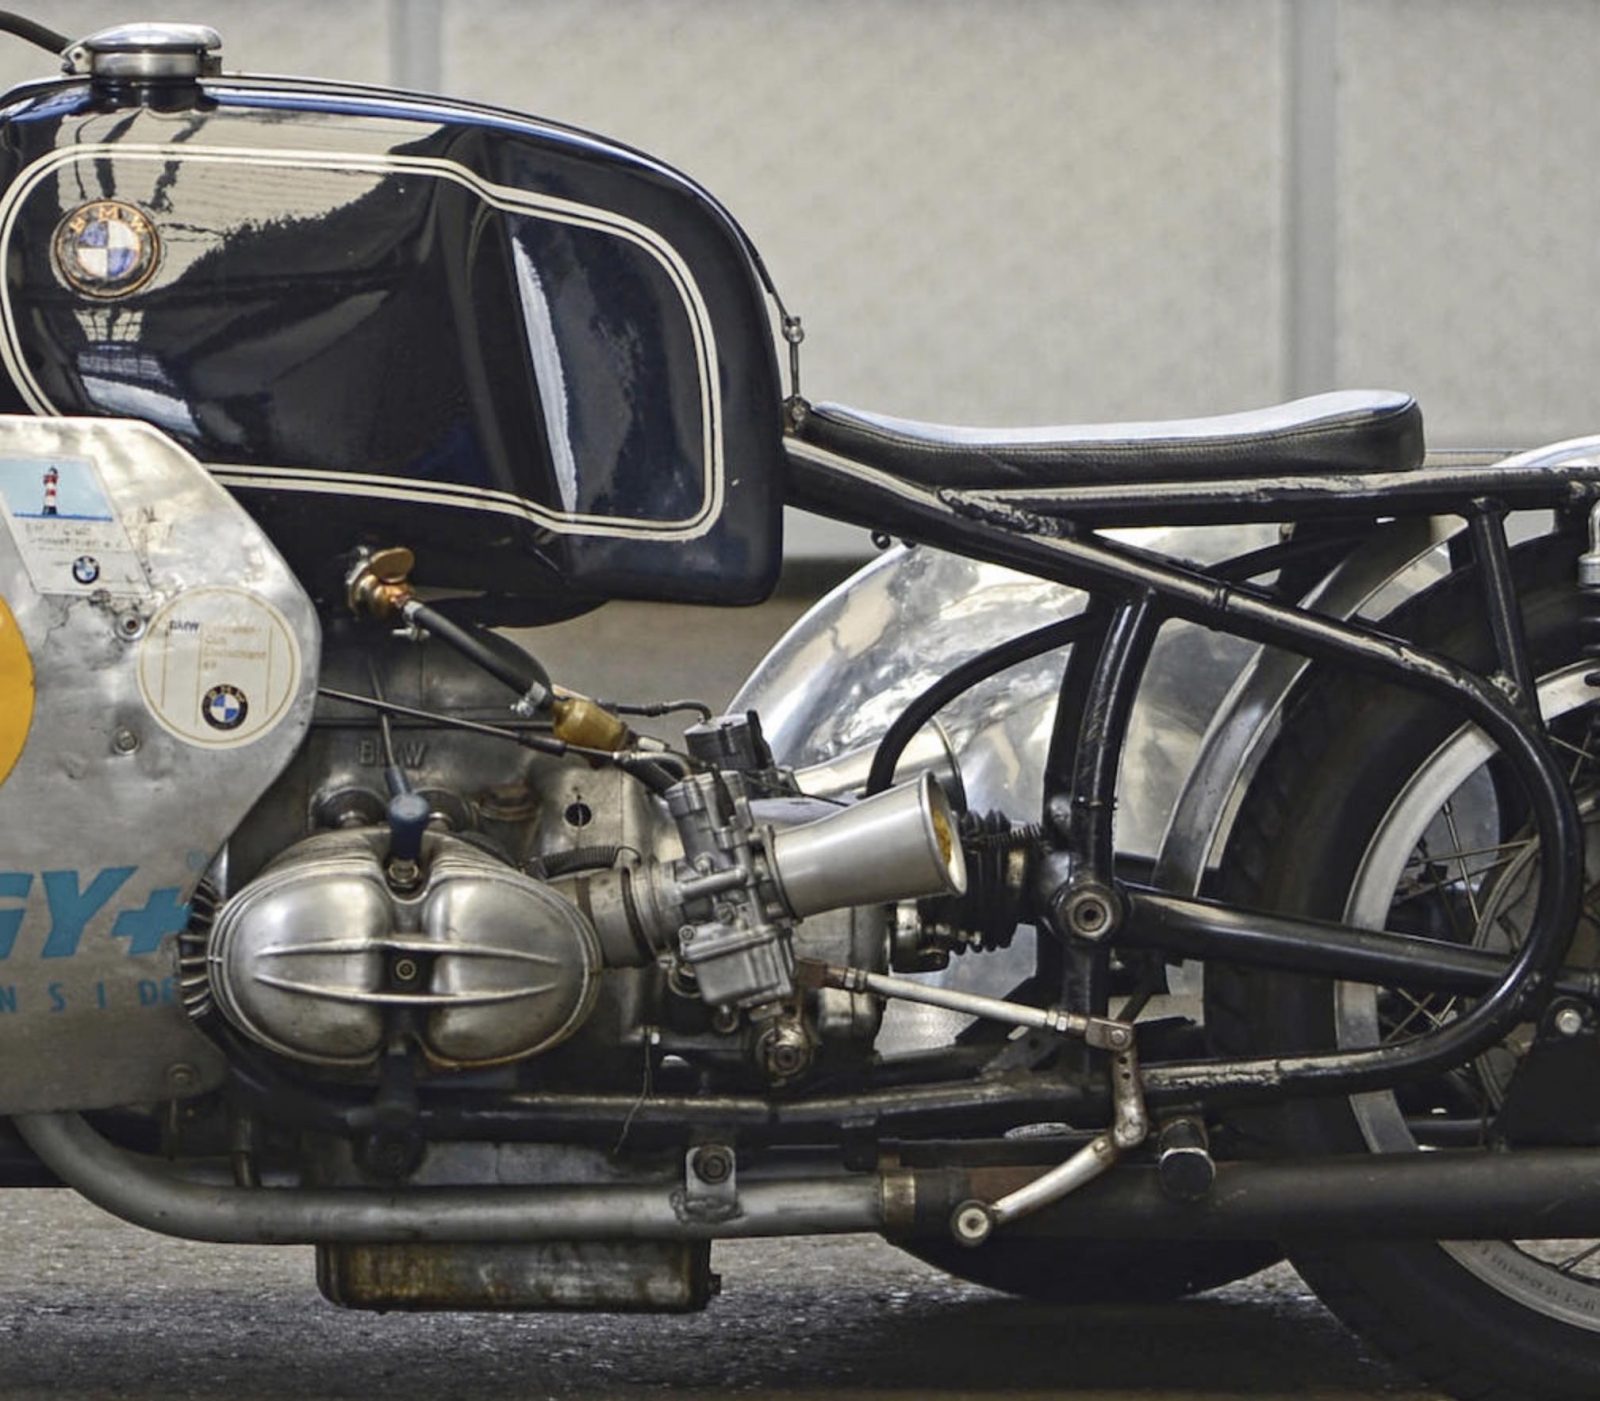 1957 BMW Racing Kneeler Motorcycle